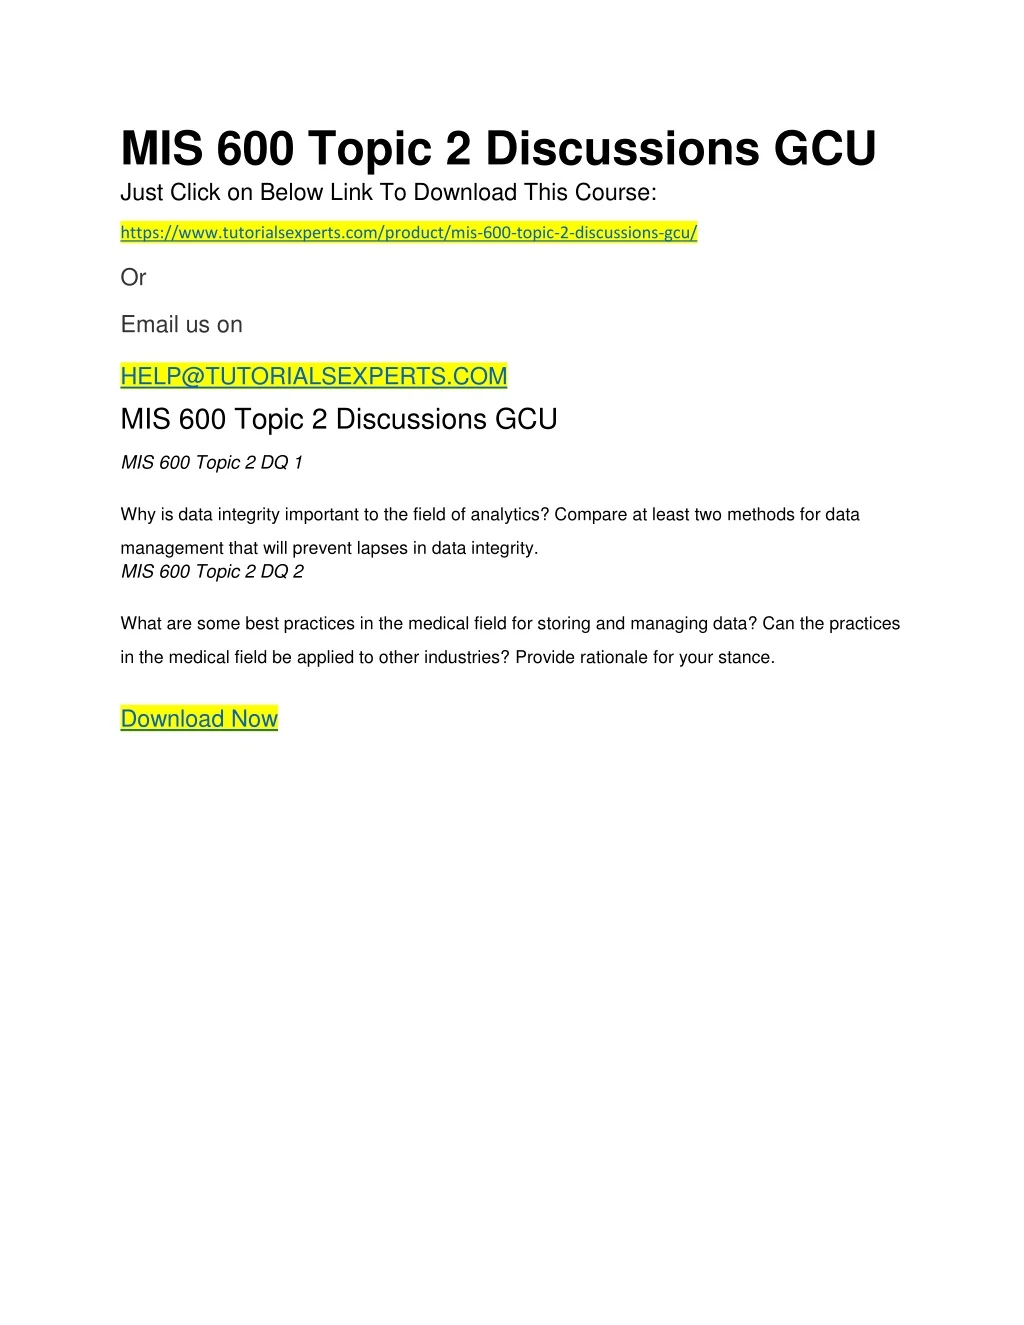 mis 600 topic 2 discussions gcu just click